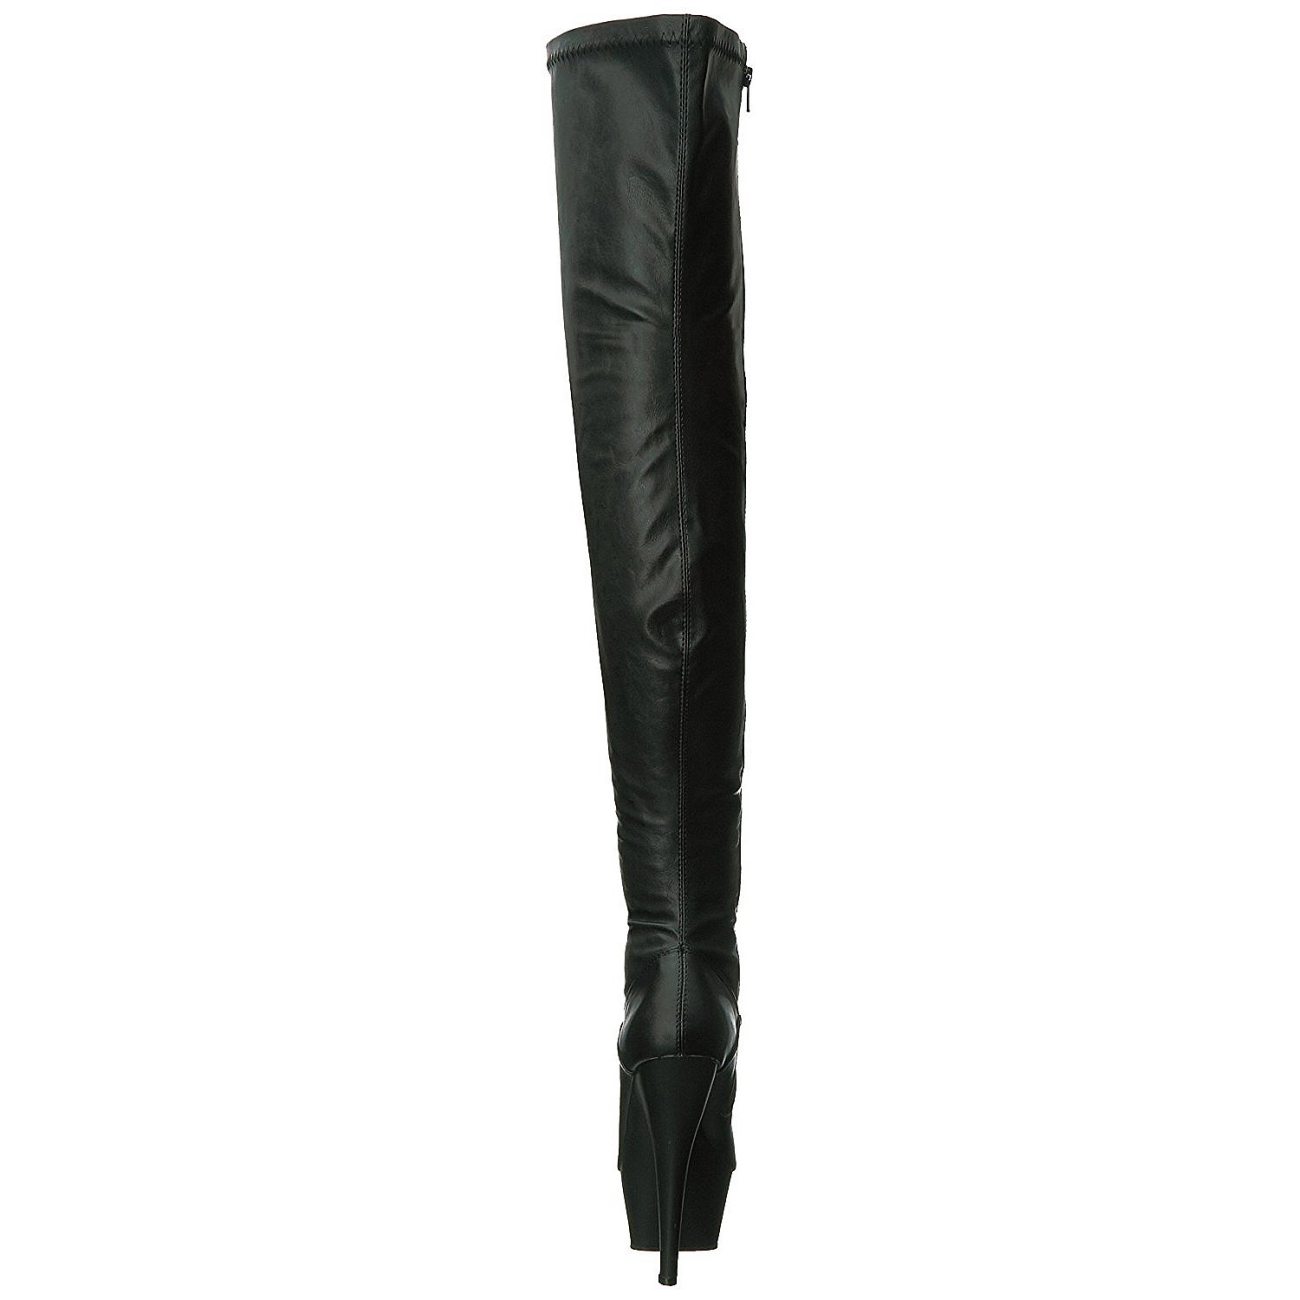 Black Leatherette 15 Cm Kiss 3000 Platform Thigh High Boots